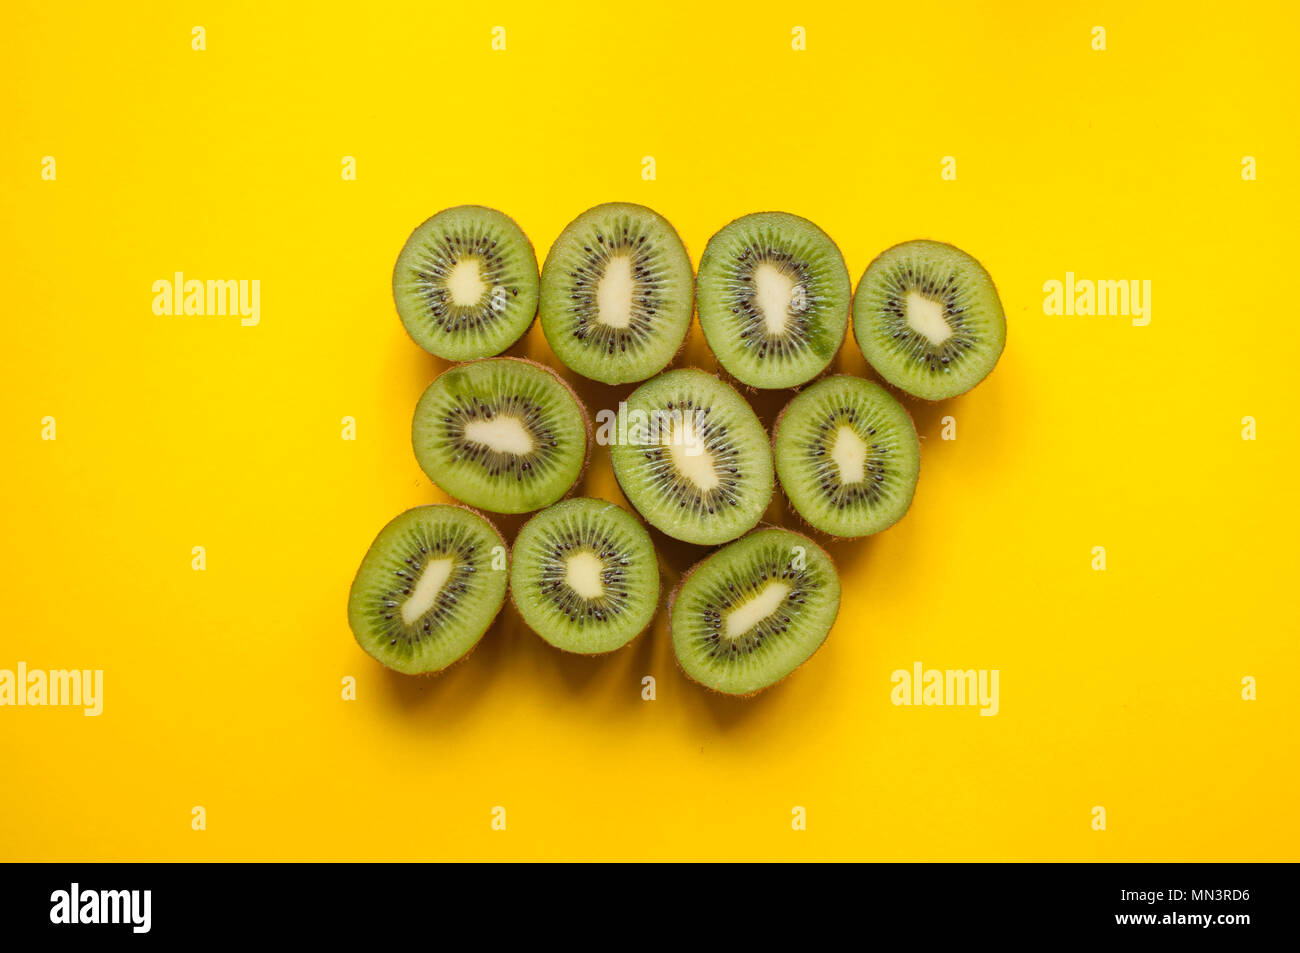 Flat lay of many halves of green kiwi fruit on bright yellow background. Stock Photo